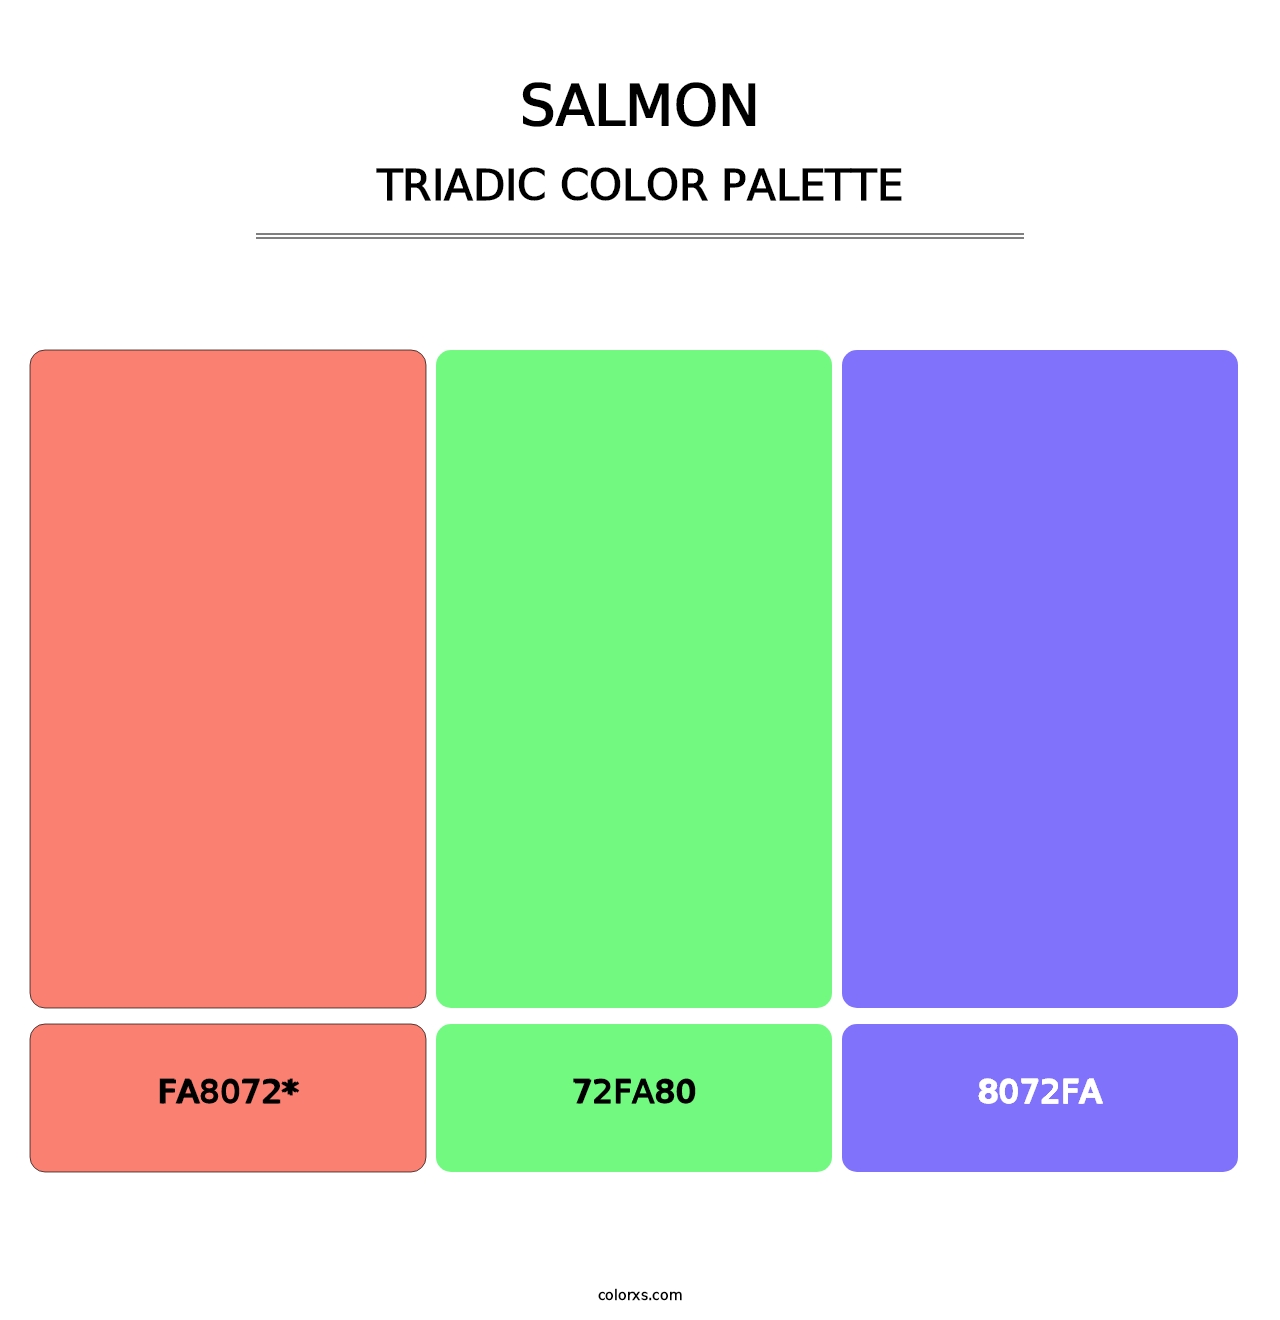 Salmon - Triadic Color Palette